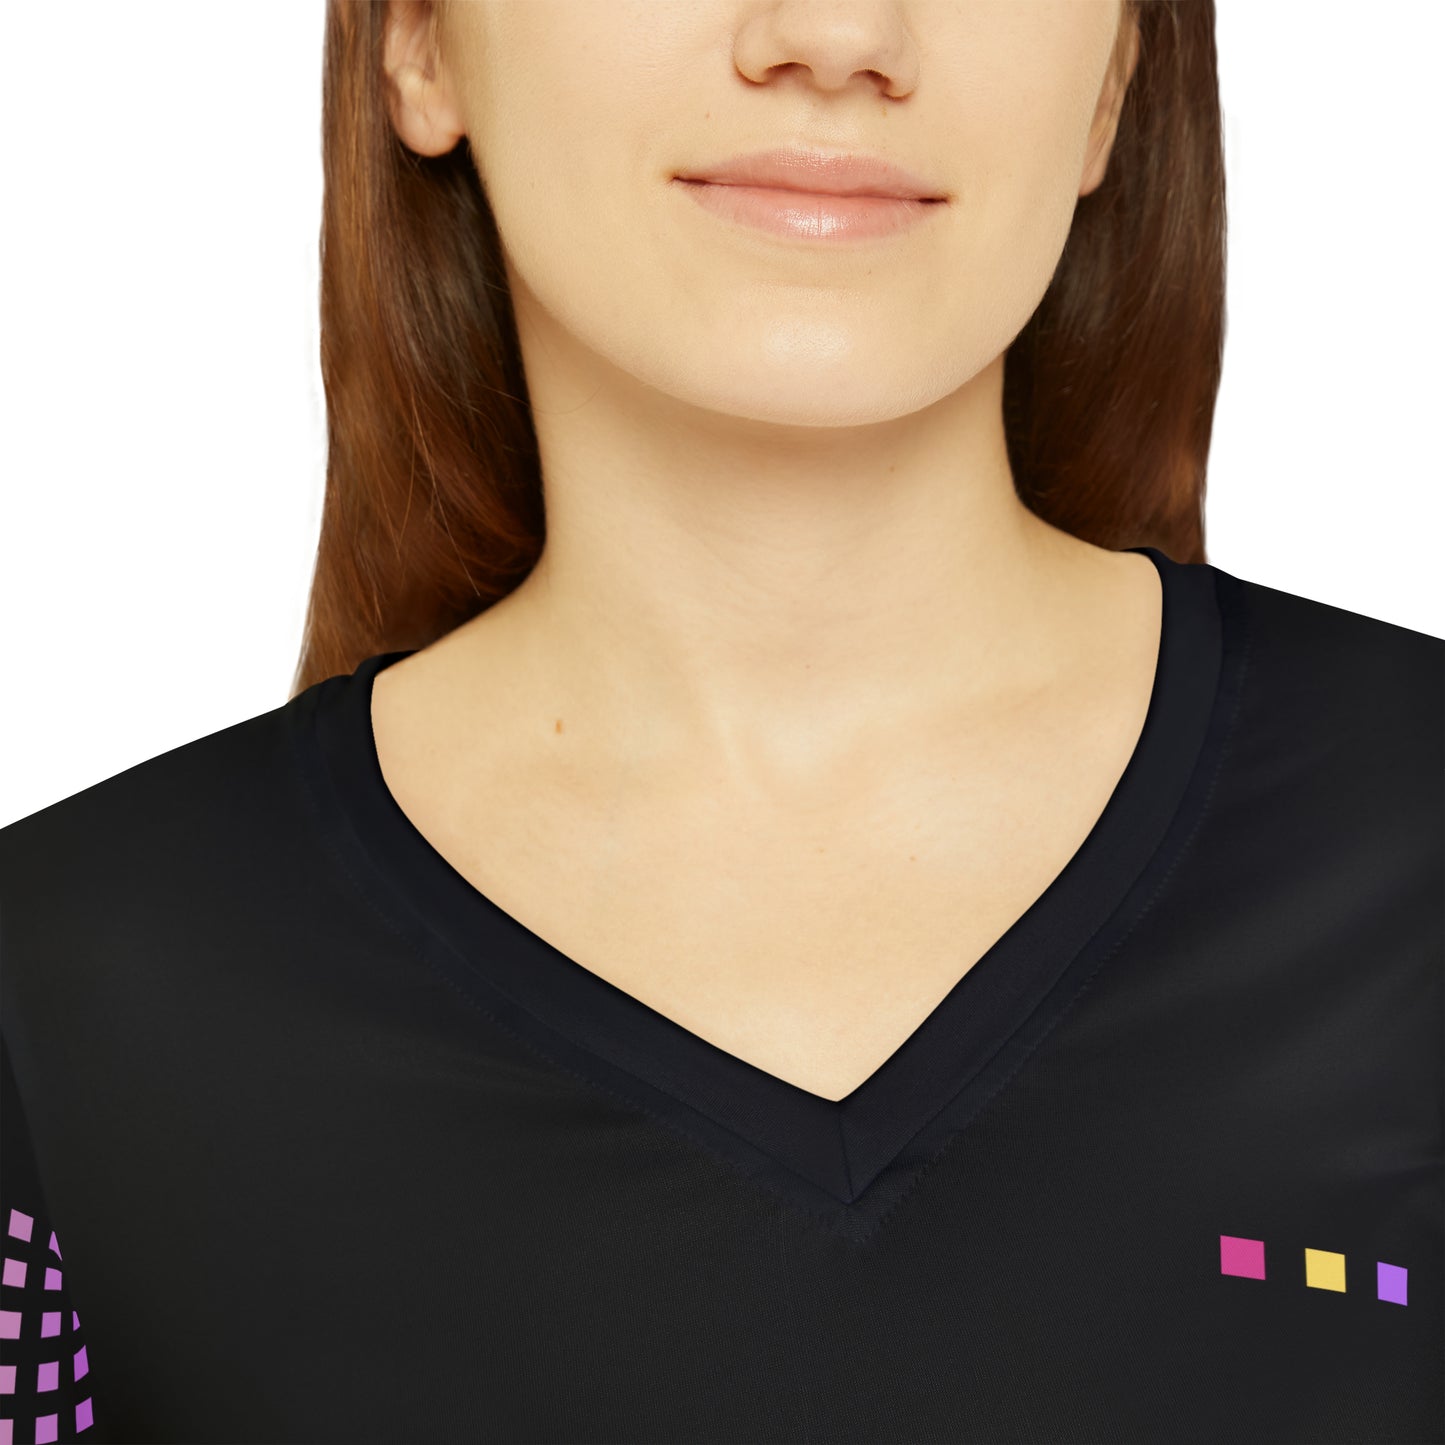 Paladin Punks Women's Long Sleeve V-neck Shirt Black Sublimation Dye